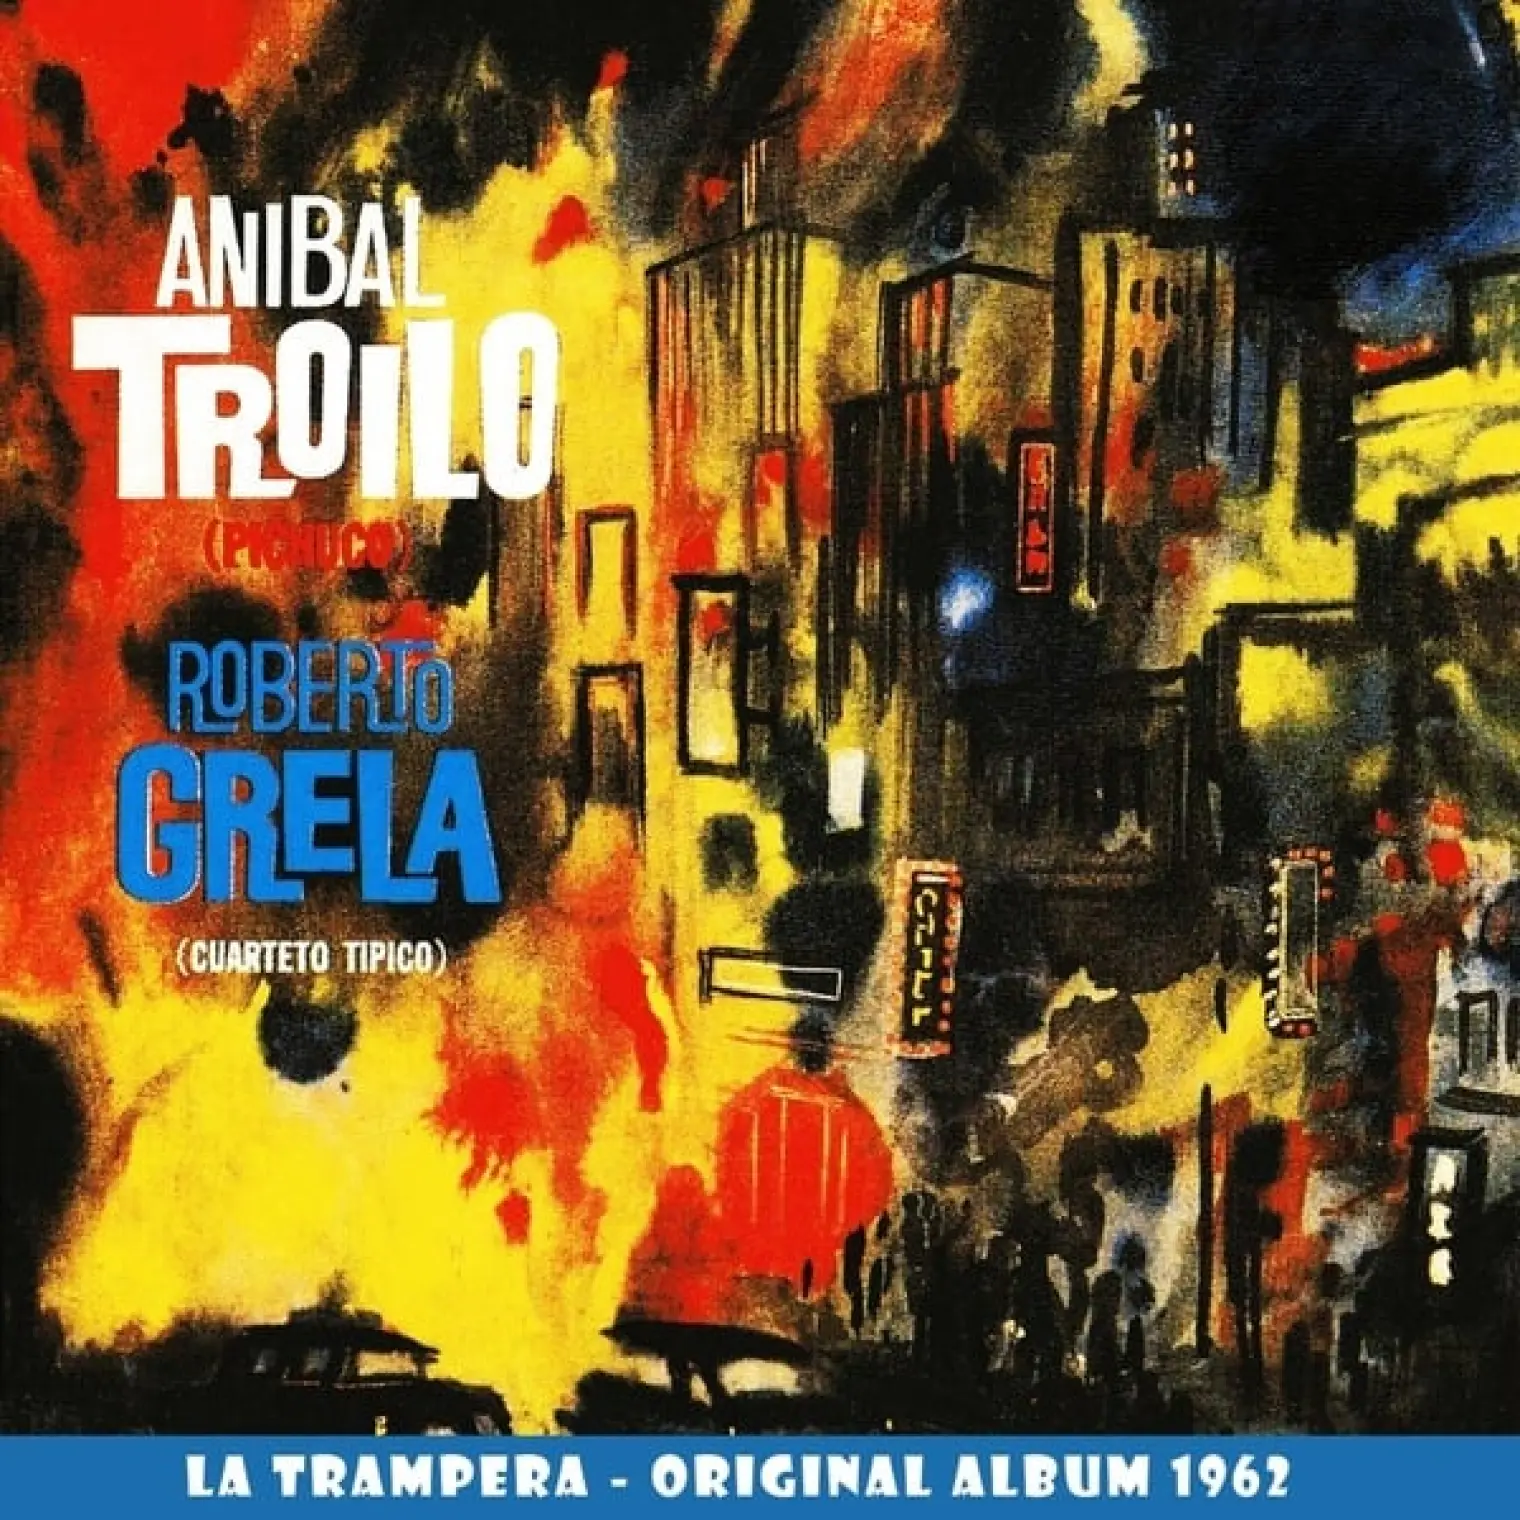 La Trampera (Original Album 1962) -  Anibal Troilo 